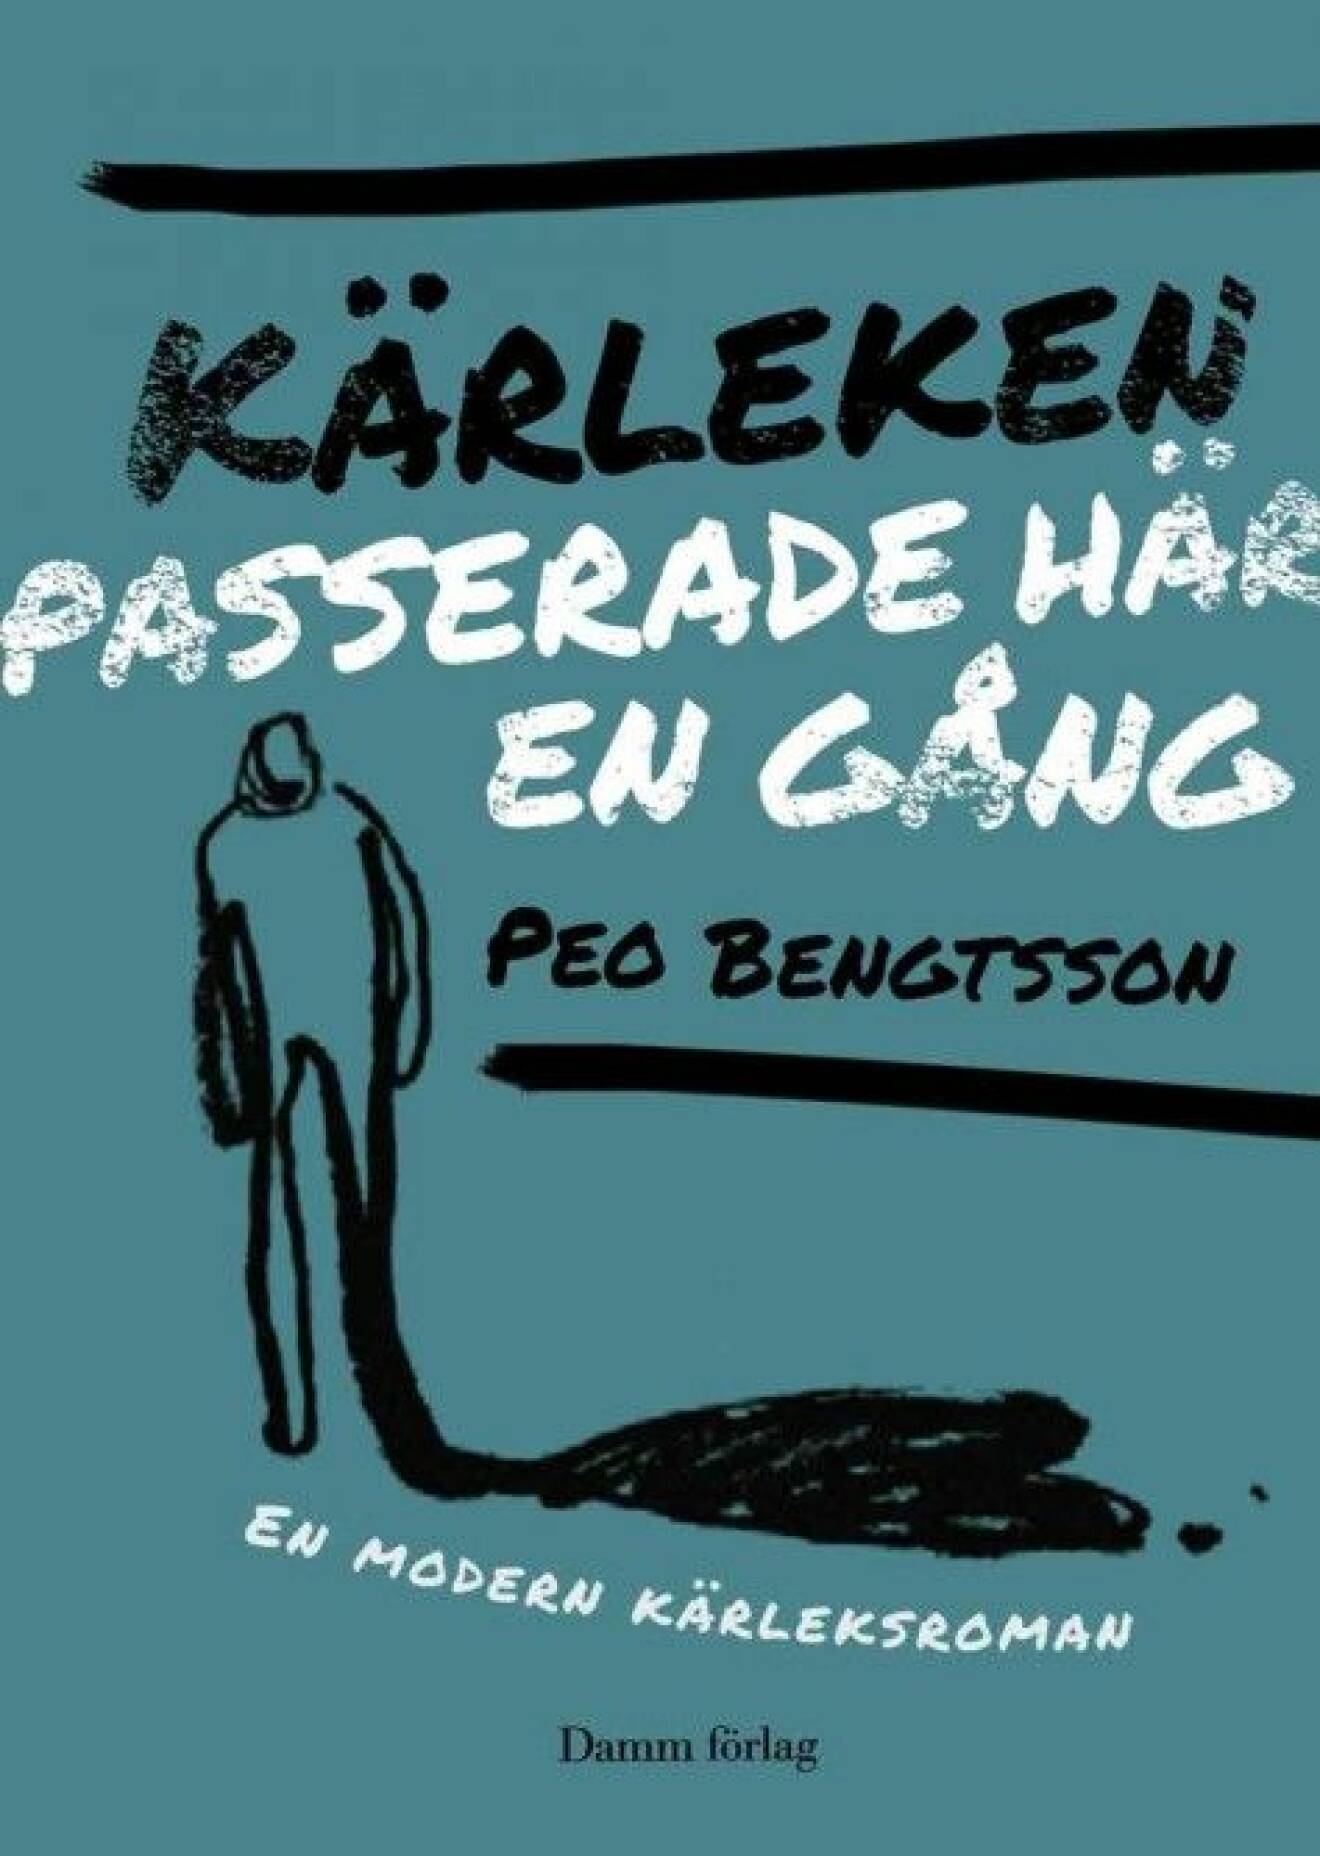 Peo-Bengtsson-Karleken-passerade